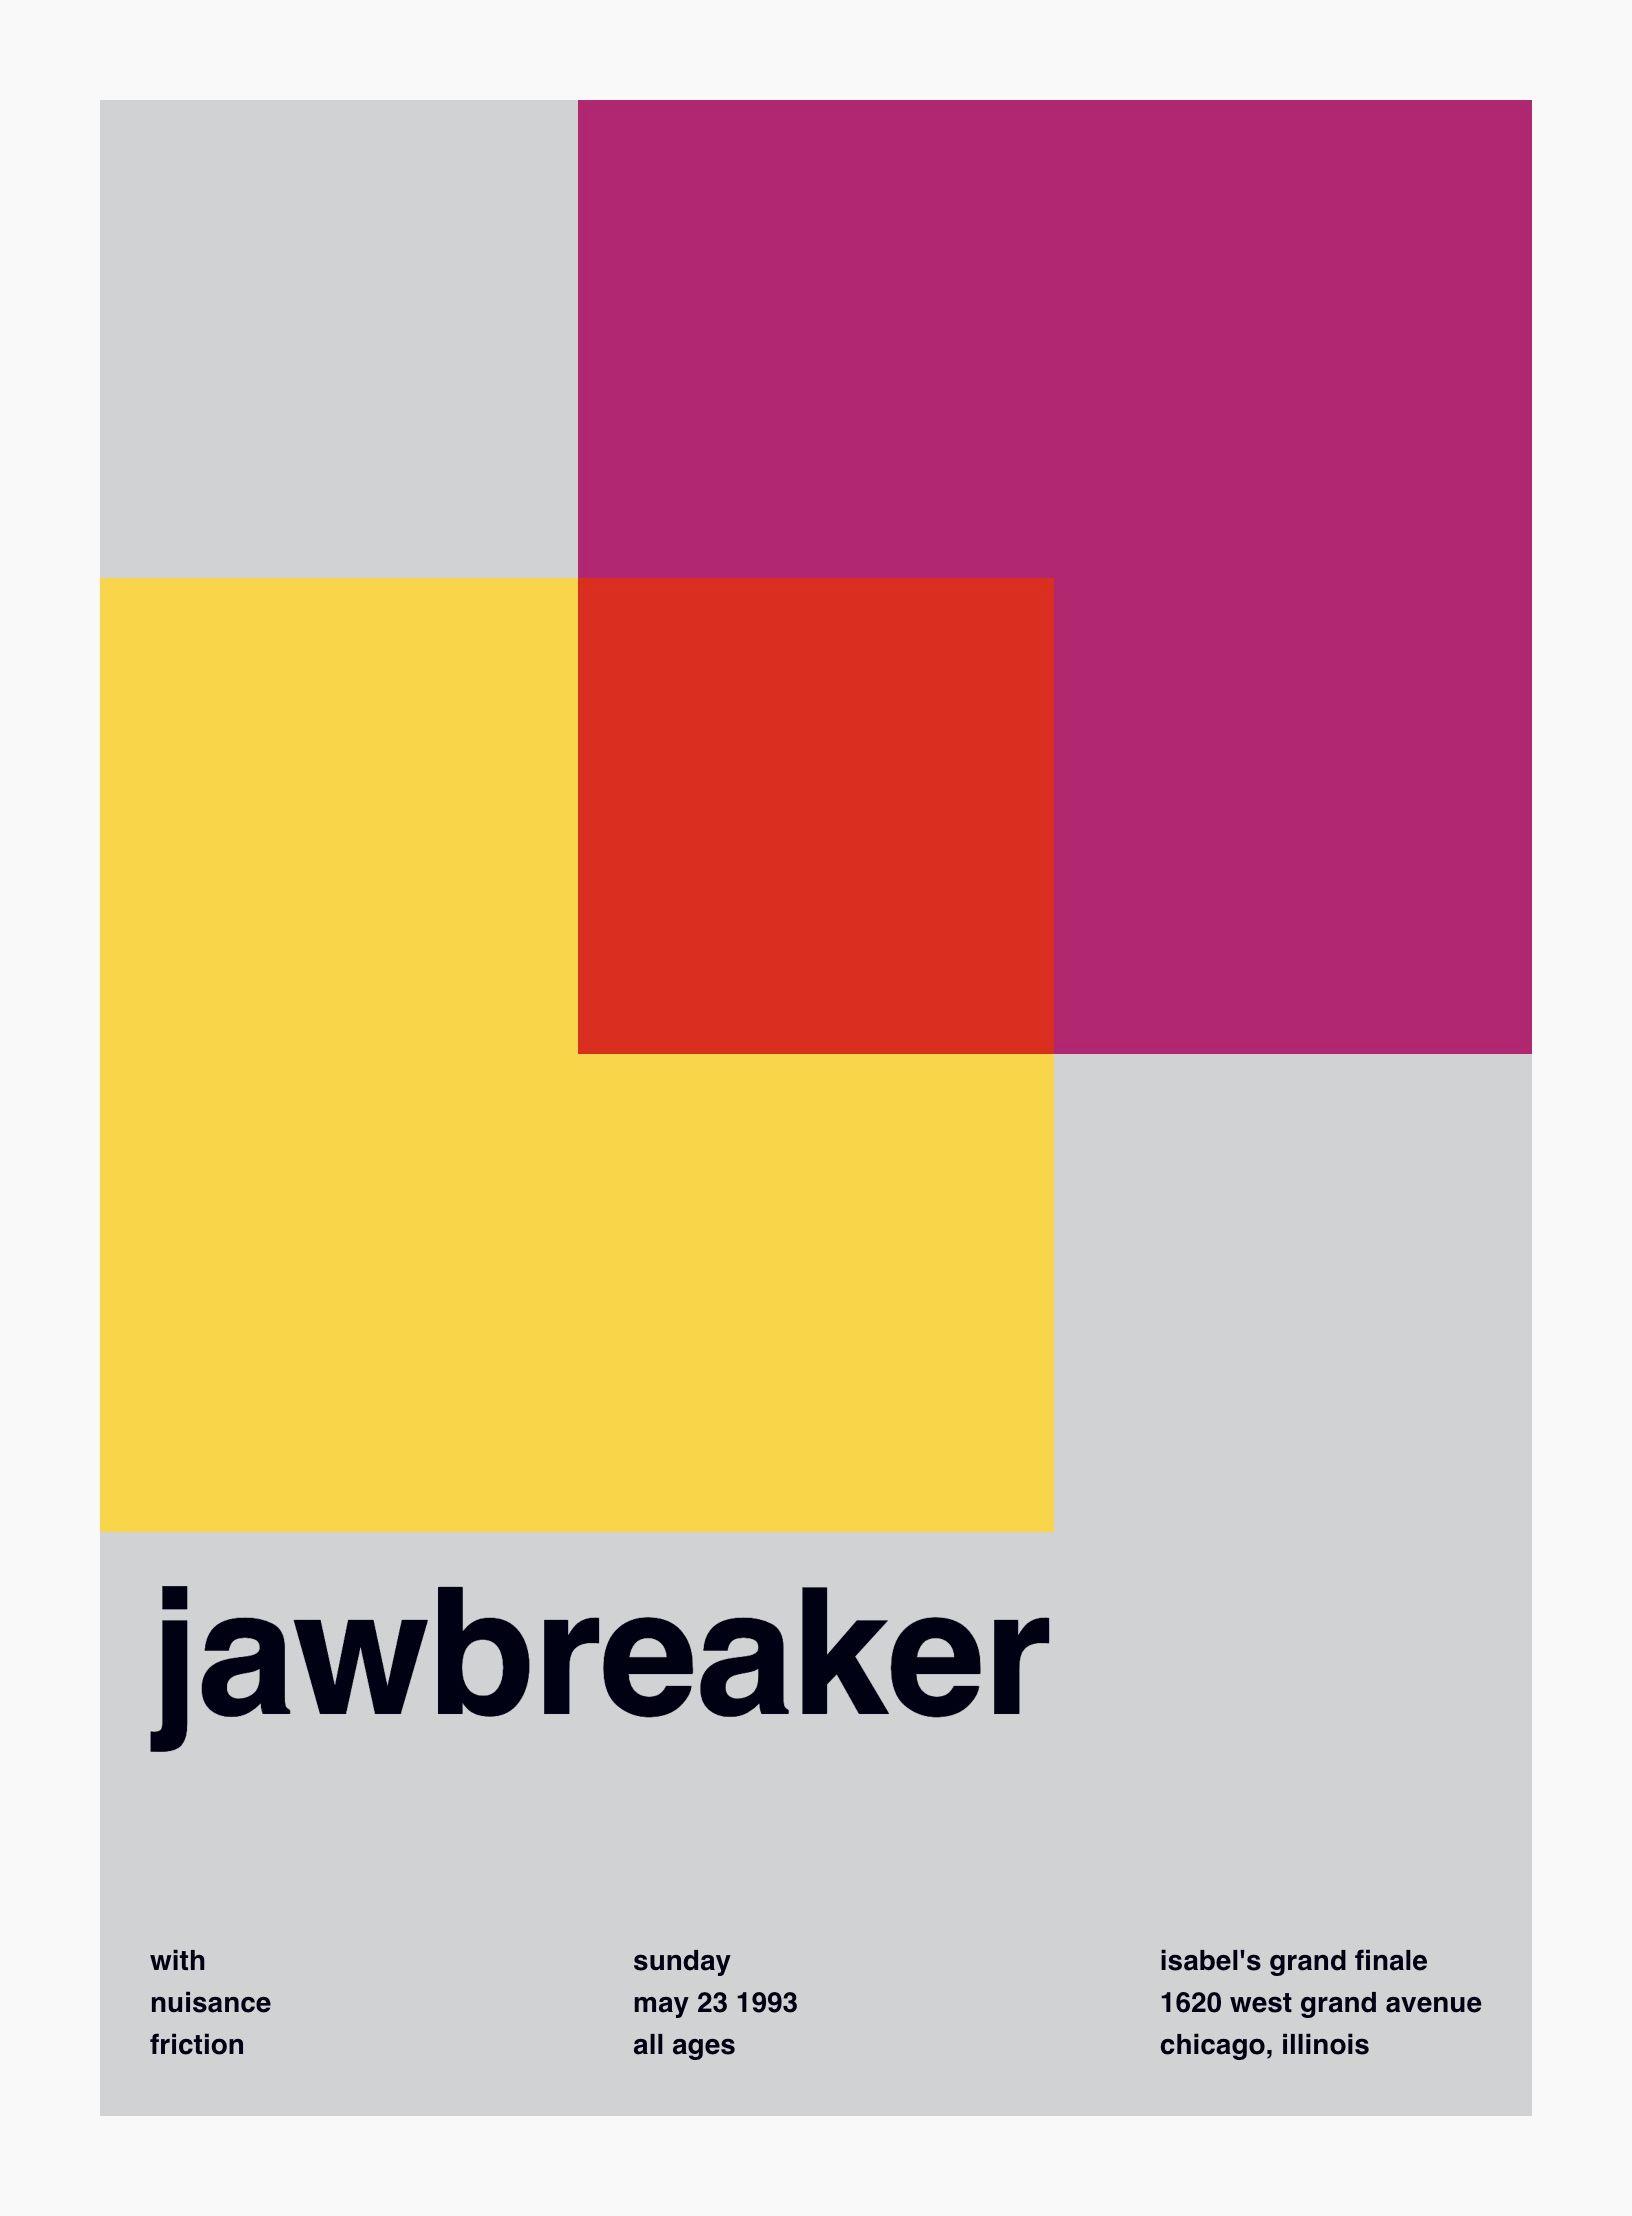 swissted - jawbreaker